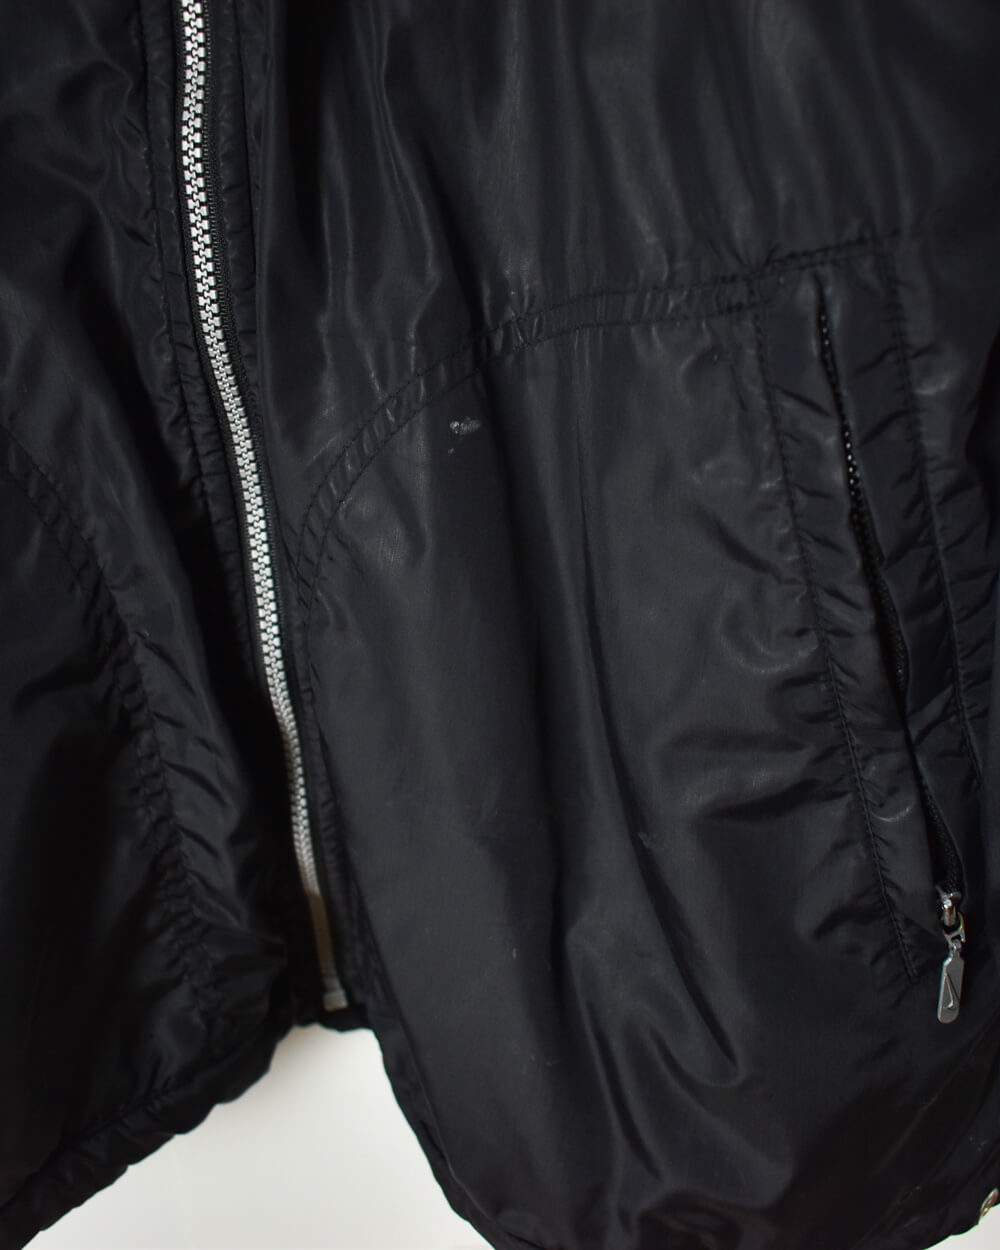 Black Nike Winter Coat -  Large